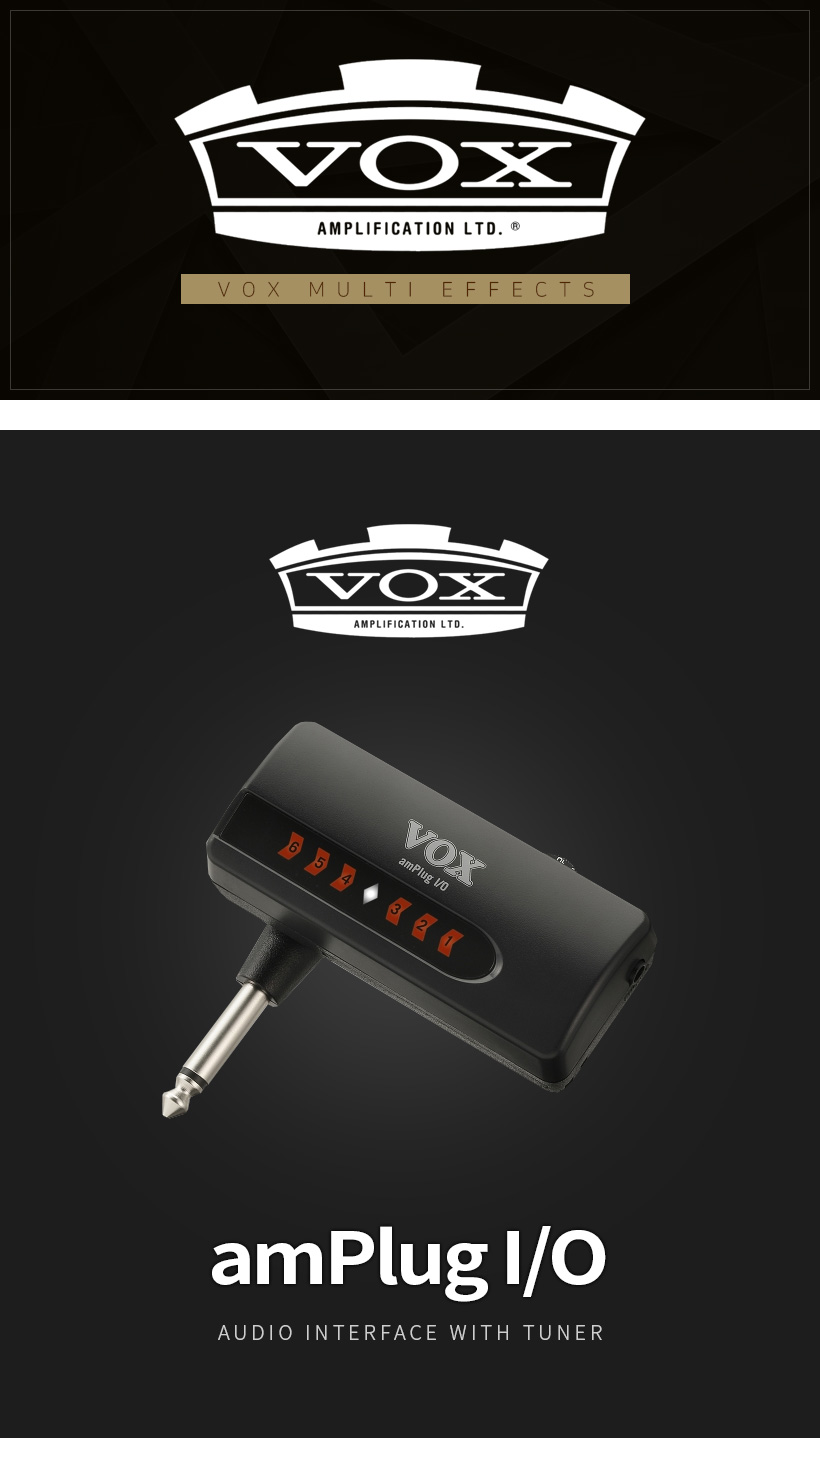 VOX 기타 오디오 인터페이스 amPlug I/O